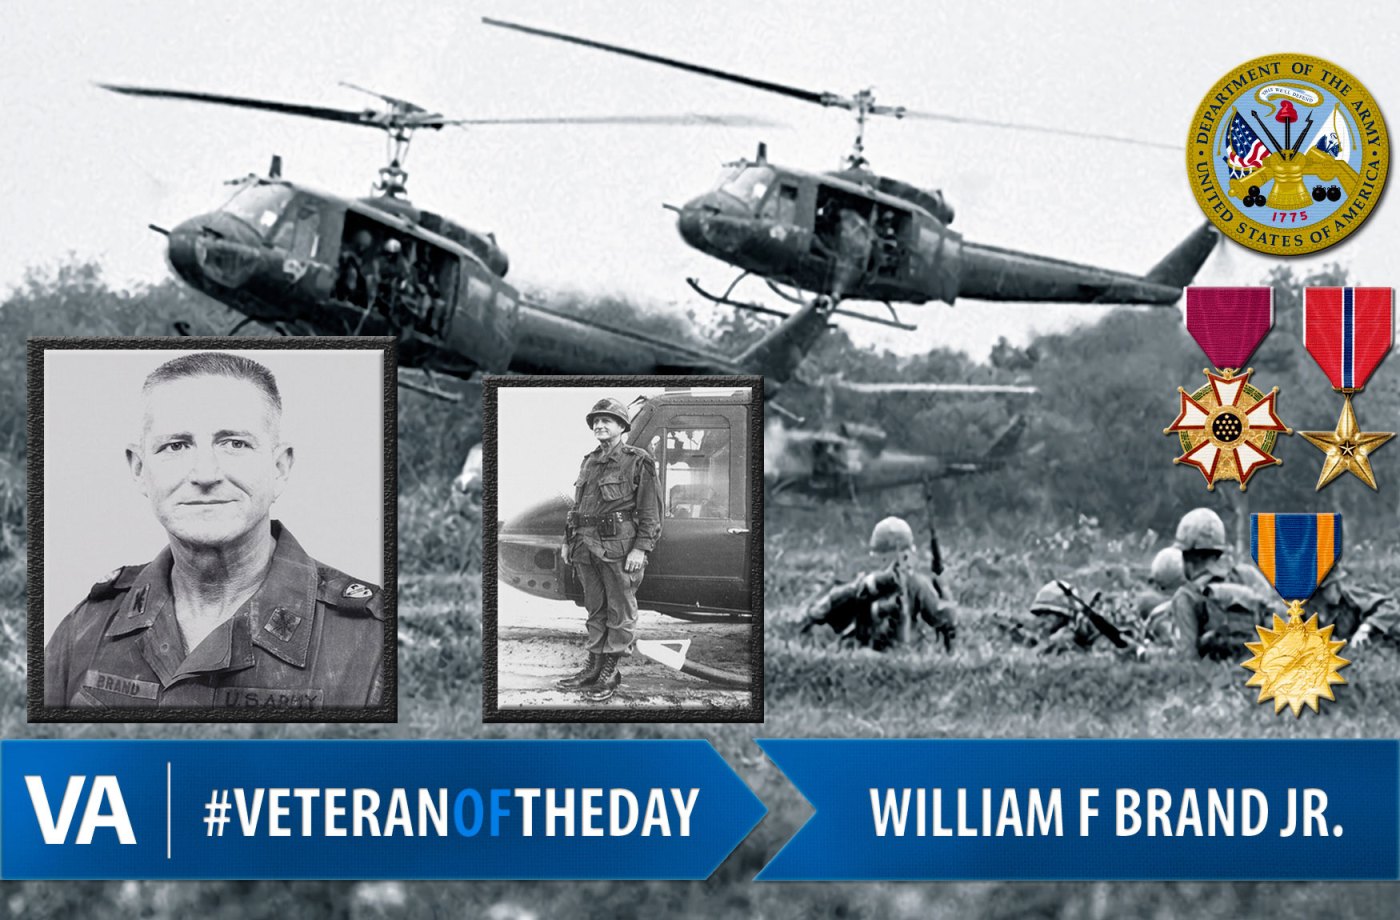 William F. Brand Jr. - Veteran of the Day